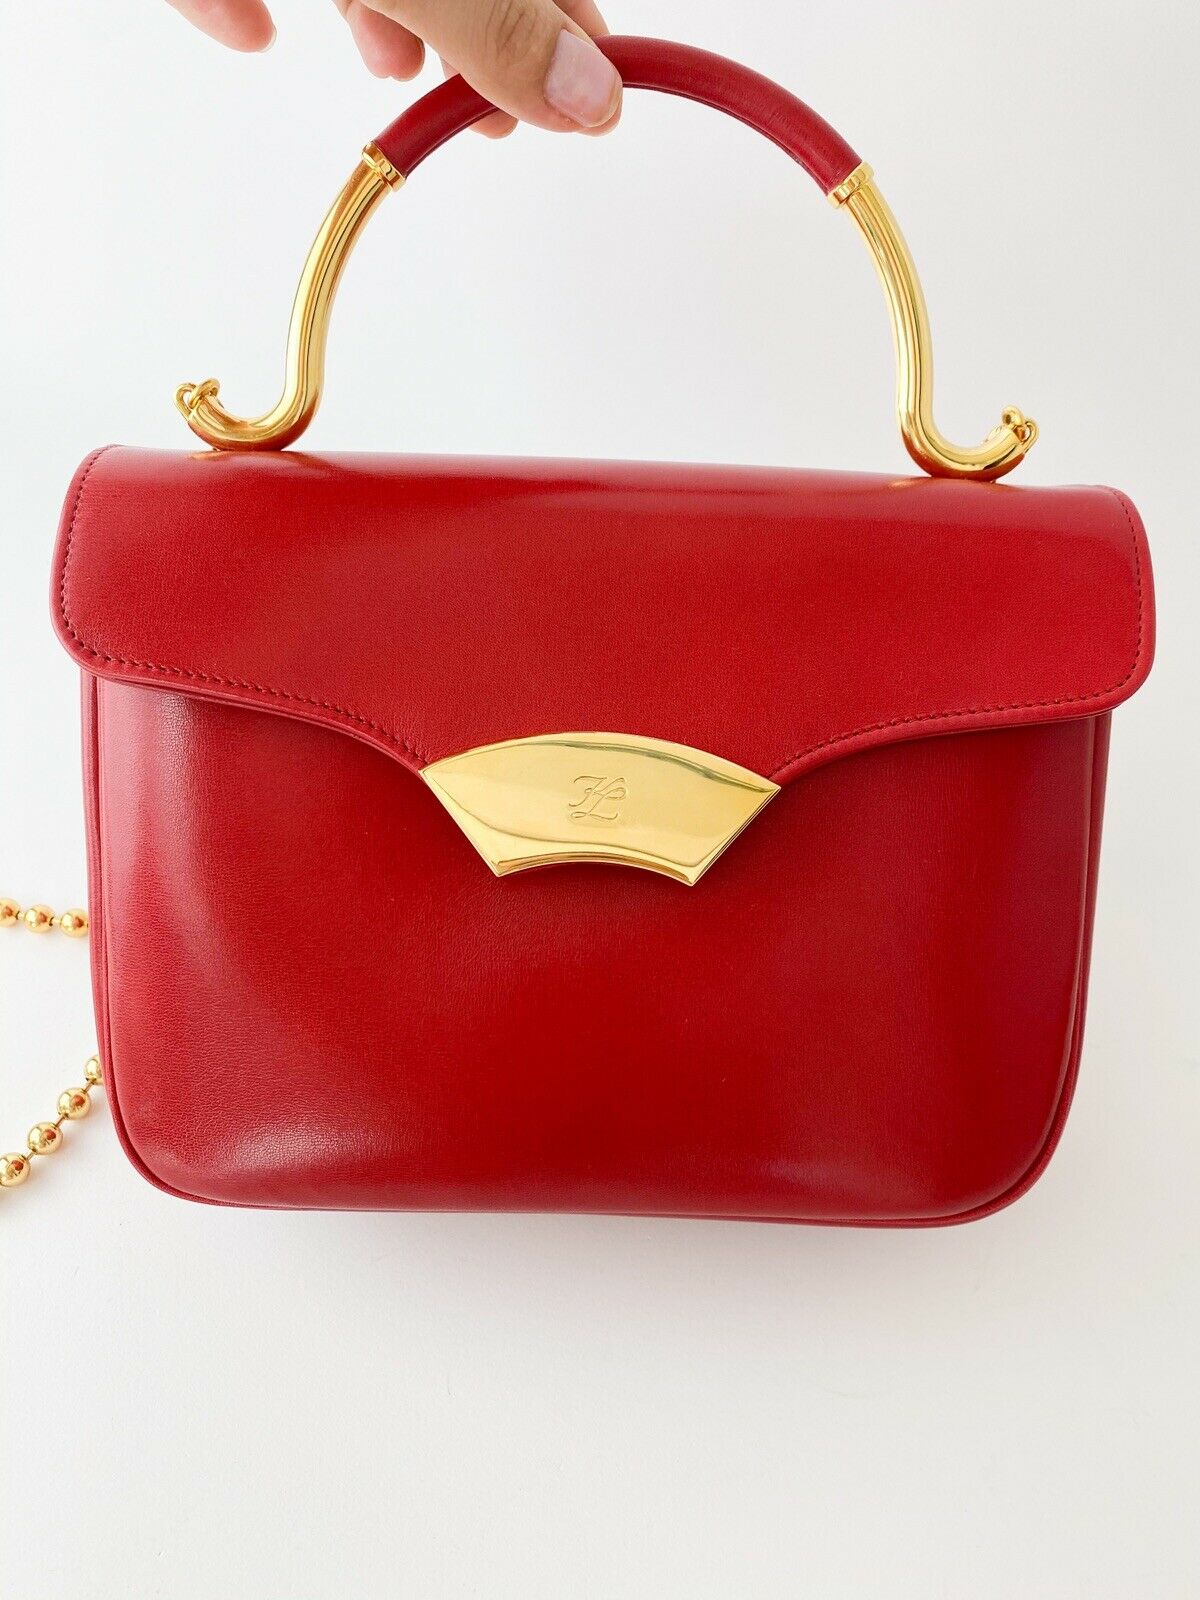 【SOLD OUT】Karl Lagerfeld Red Leather 3Ways Handbag Shoulder Cross Body Made in France Vintage